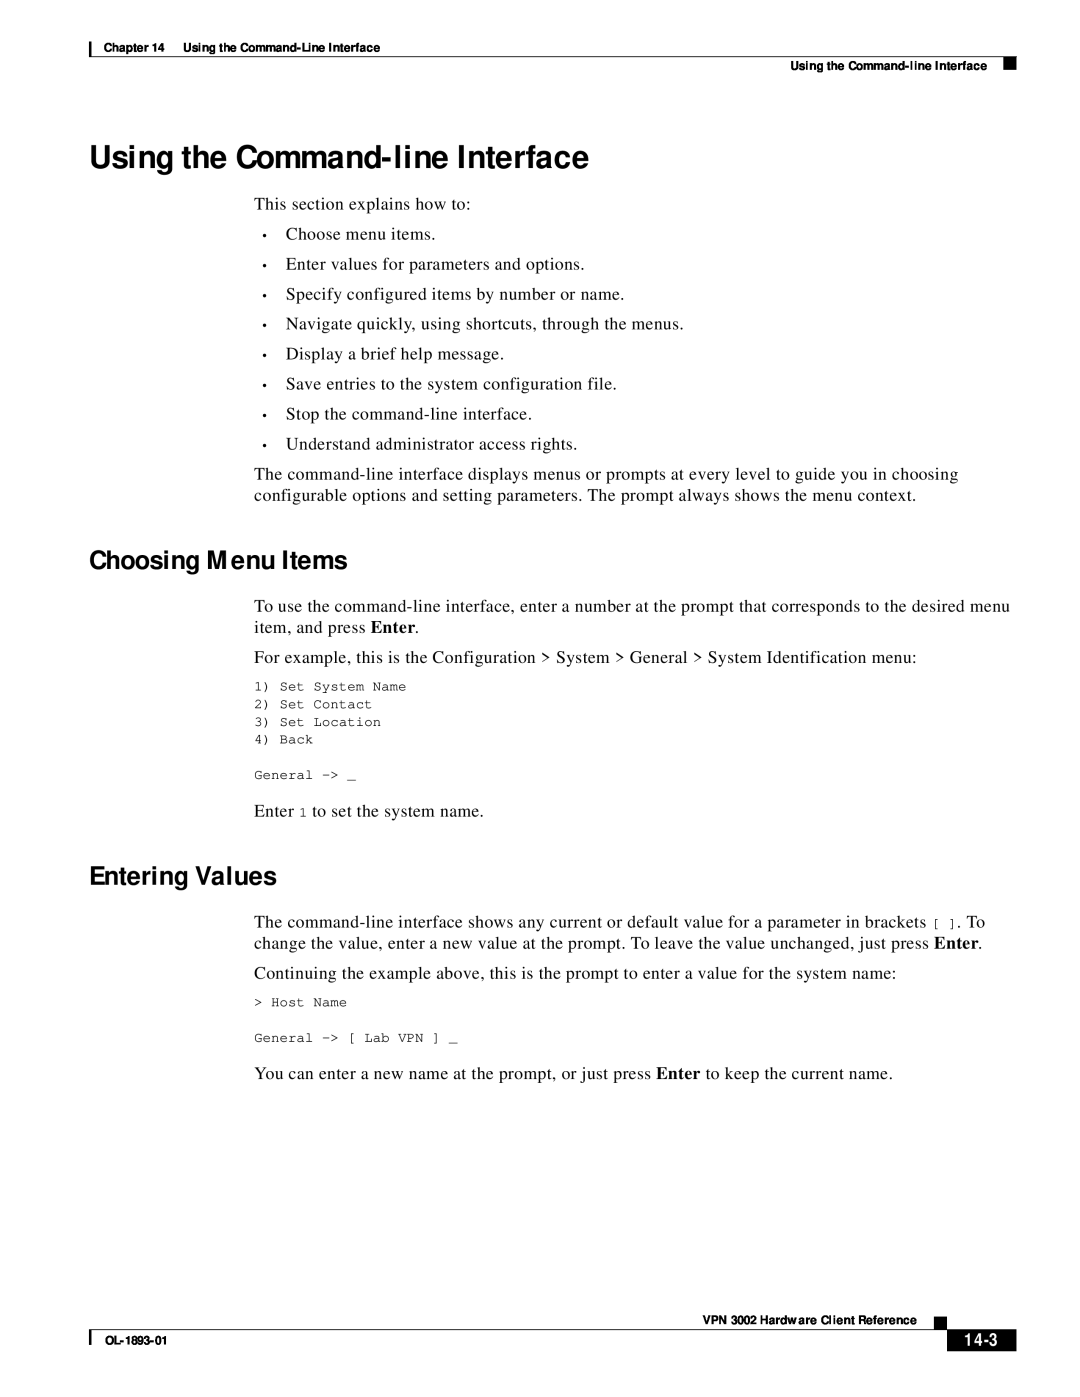 Cisco Systems VPN 3002 manual Using the Command-lineInterface, Choosing Menu Items, Entering Values, 14-3 